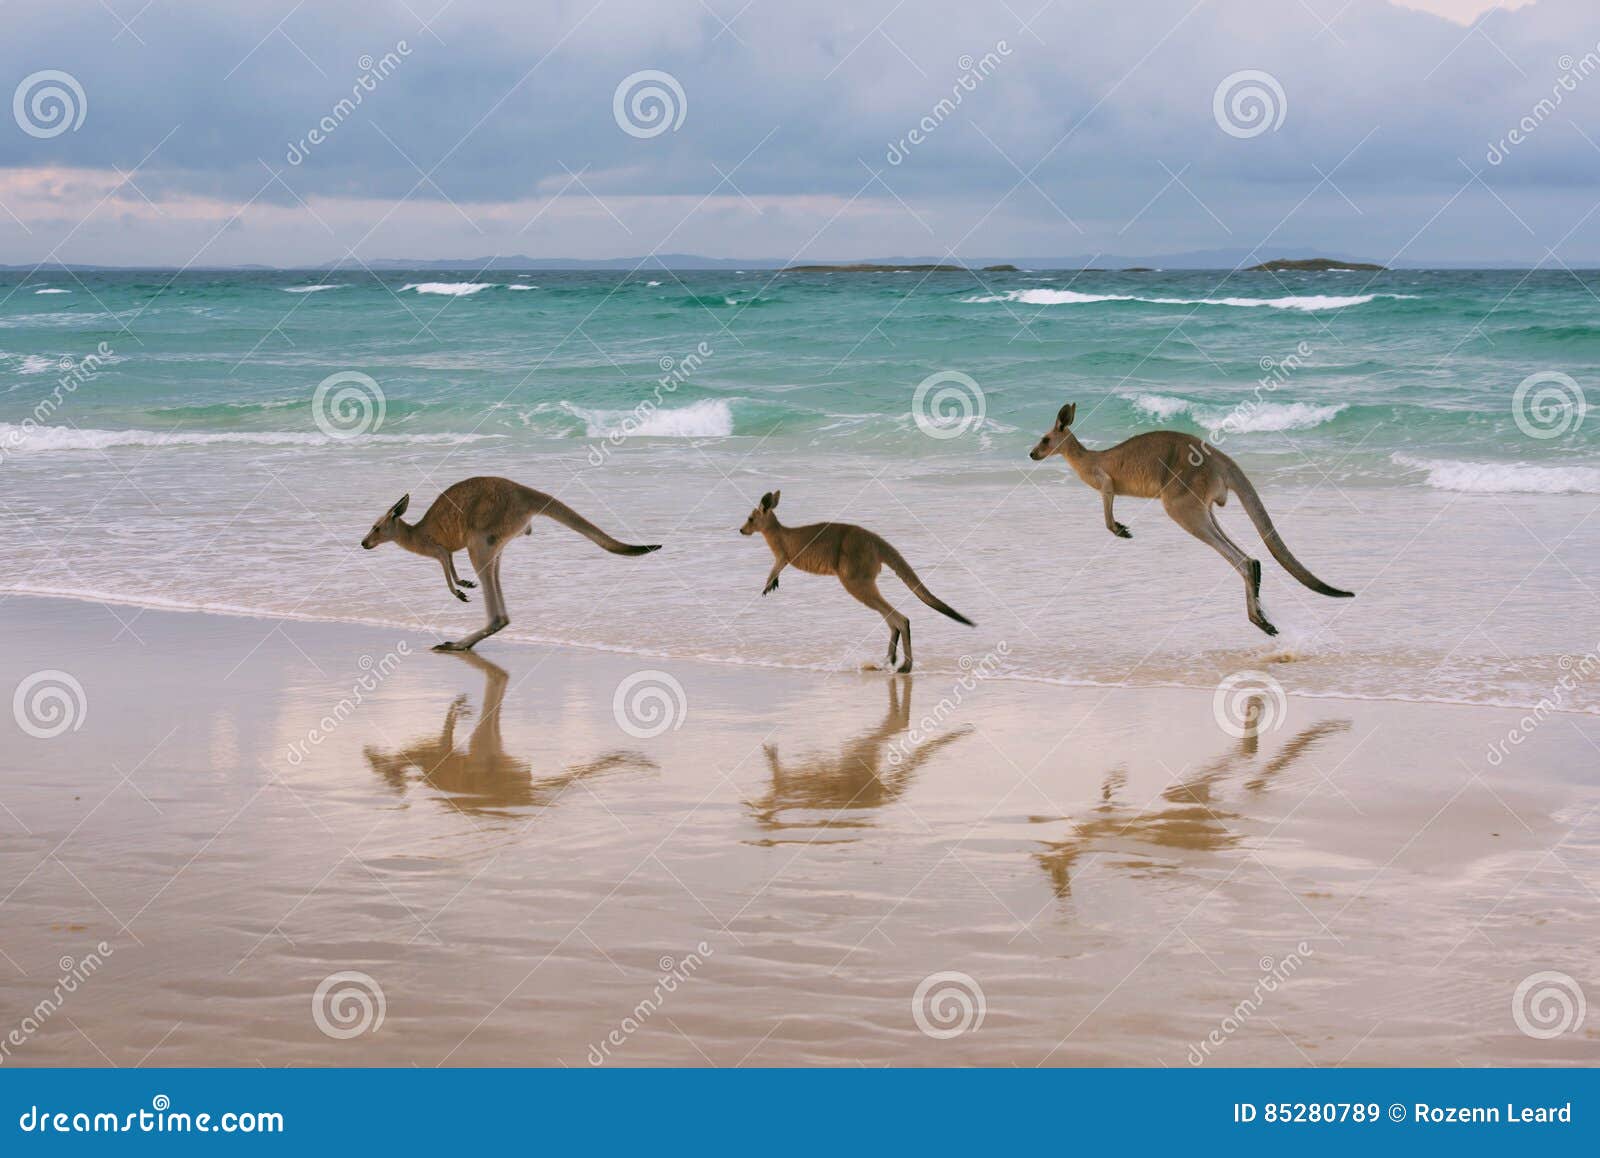 kangaroo family on the beach